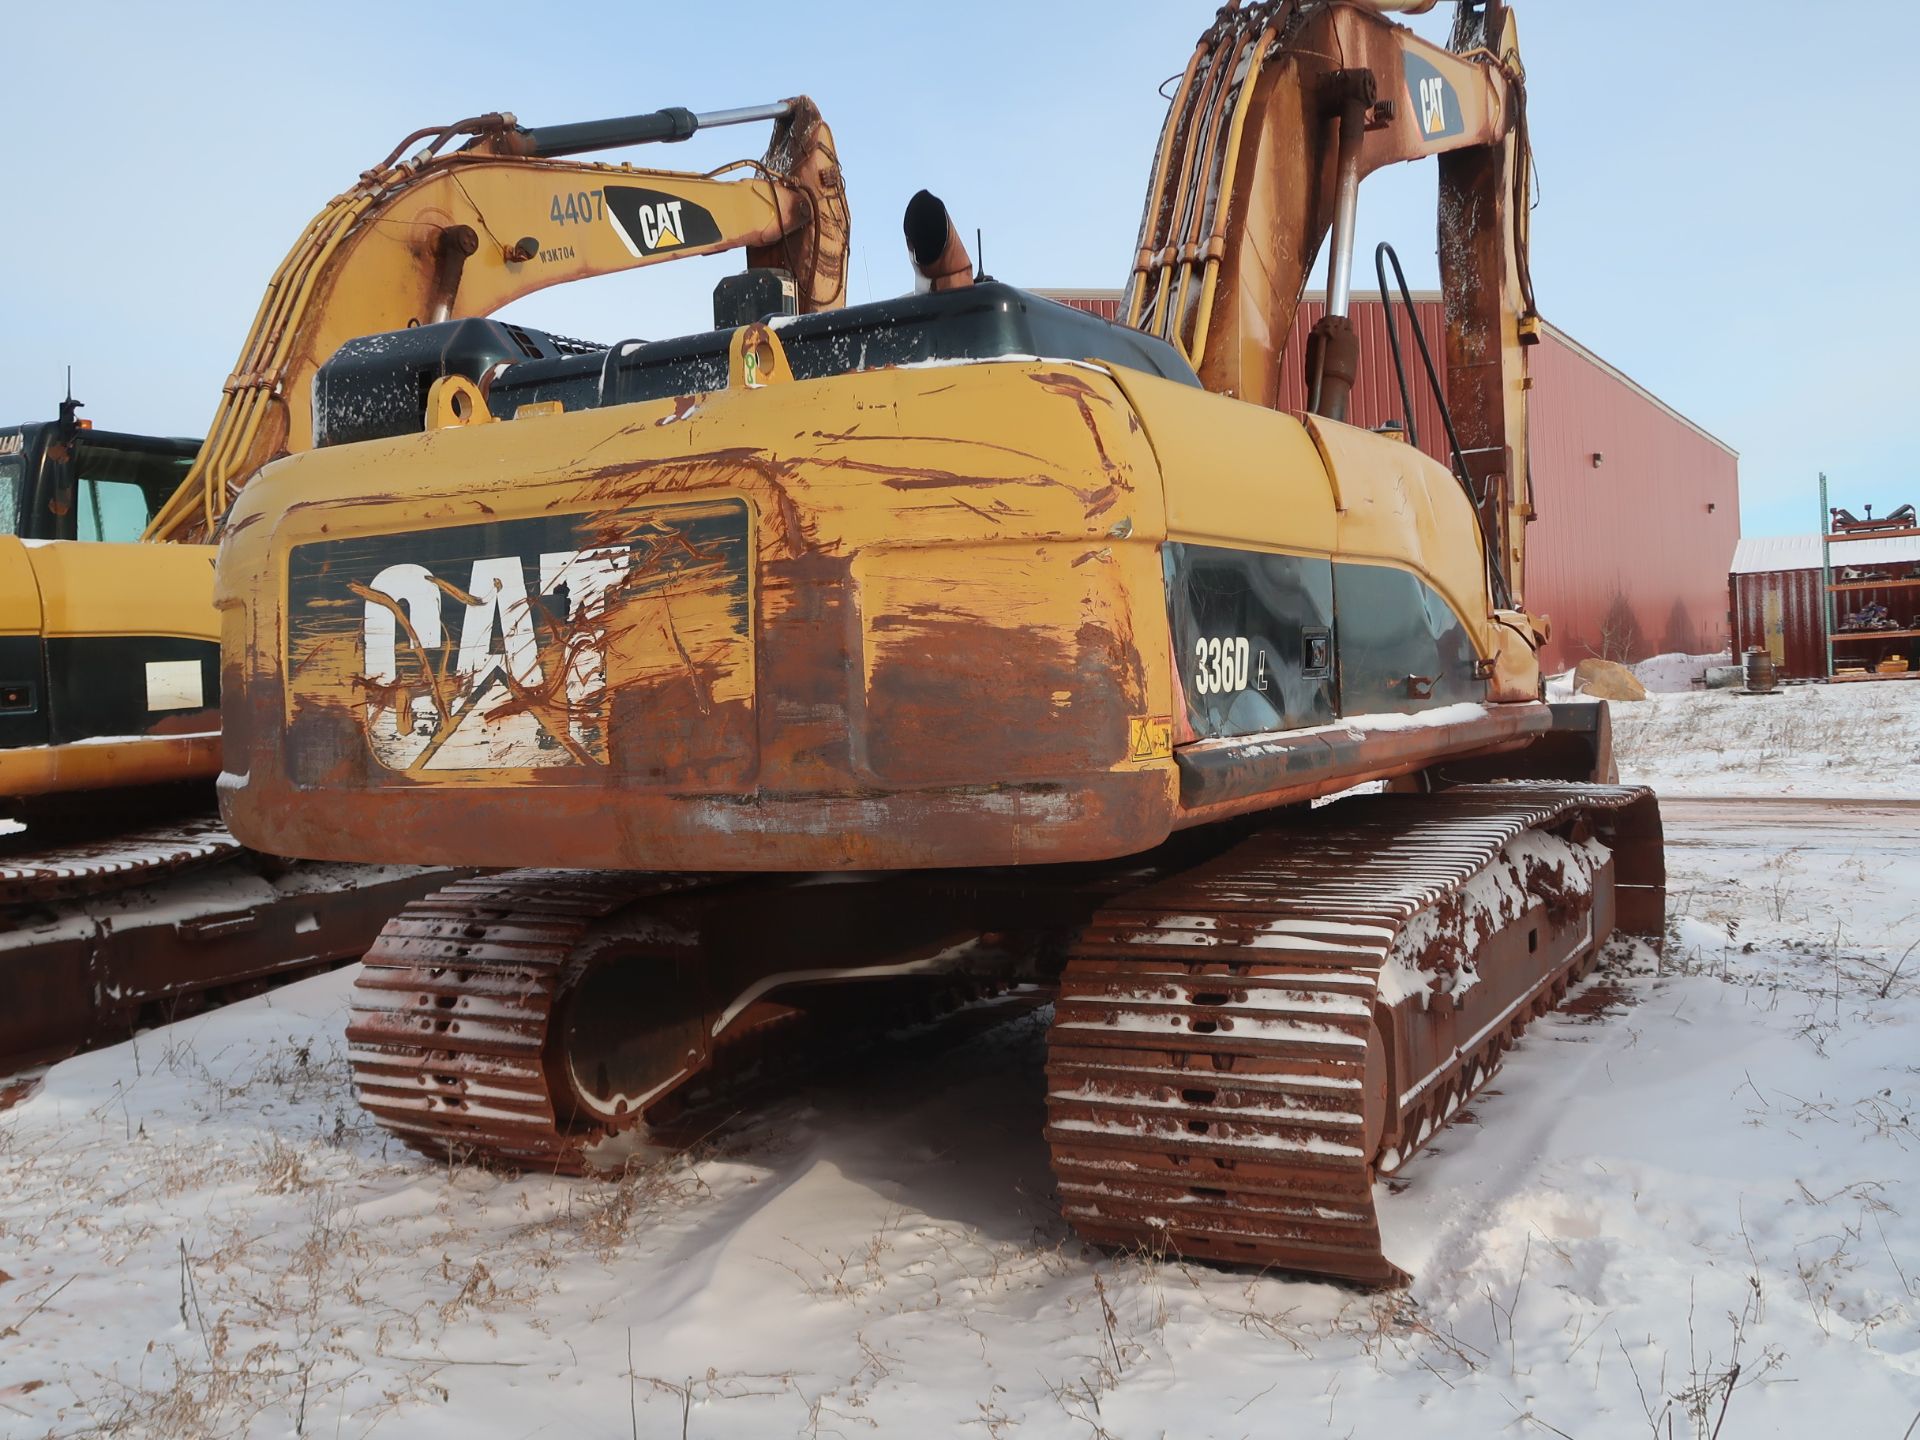 Caterpillar hydraulic excavator, model 336 DL - Image 5 of 10